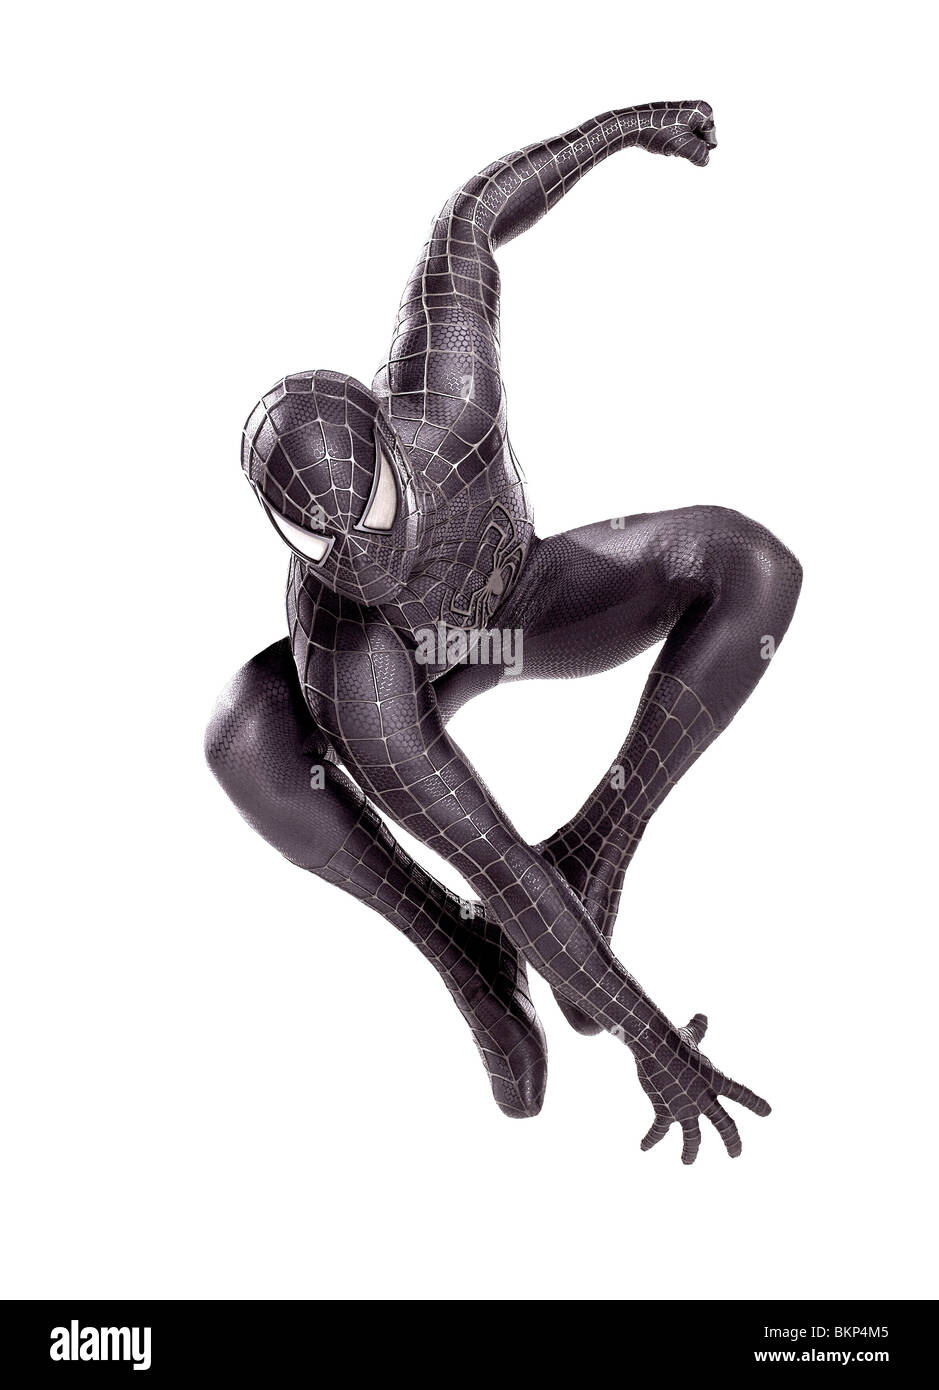 Spiderman 3 Black Suit | nacho_ijb | Flickr